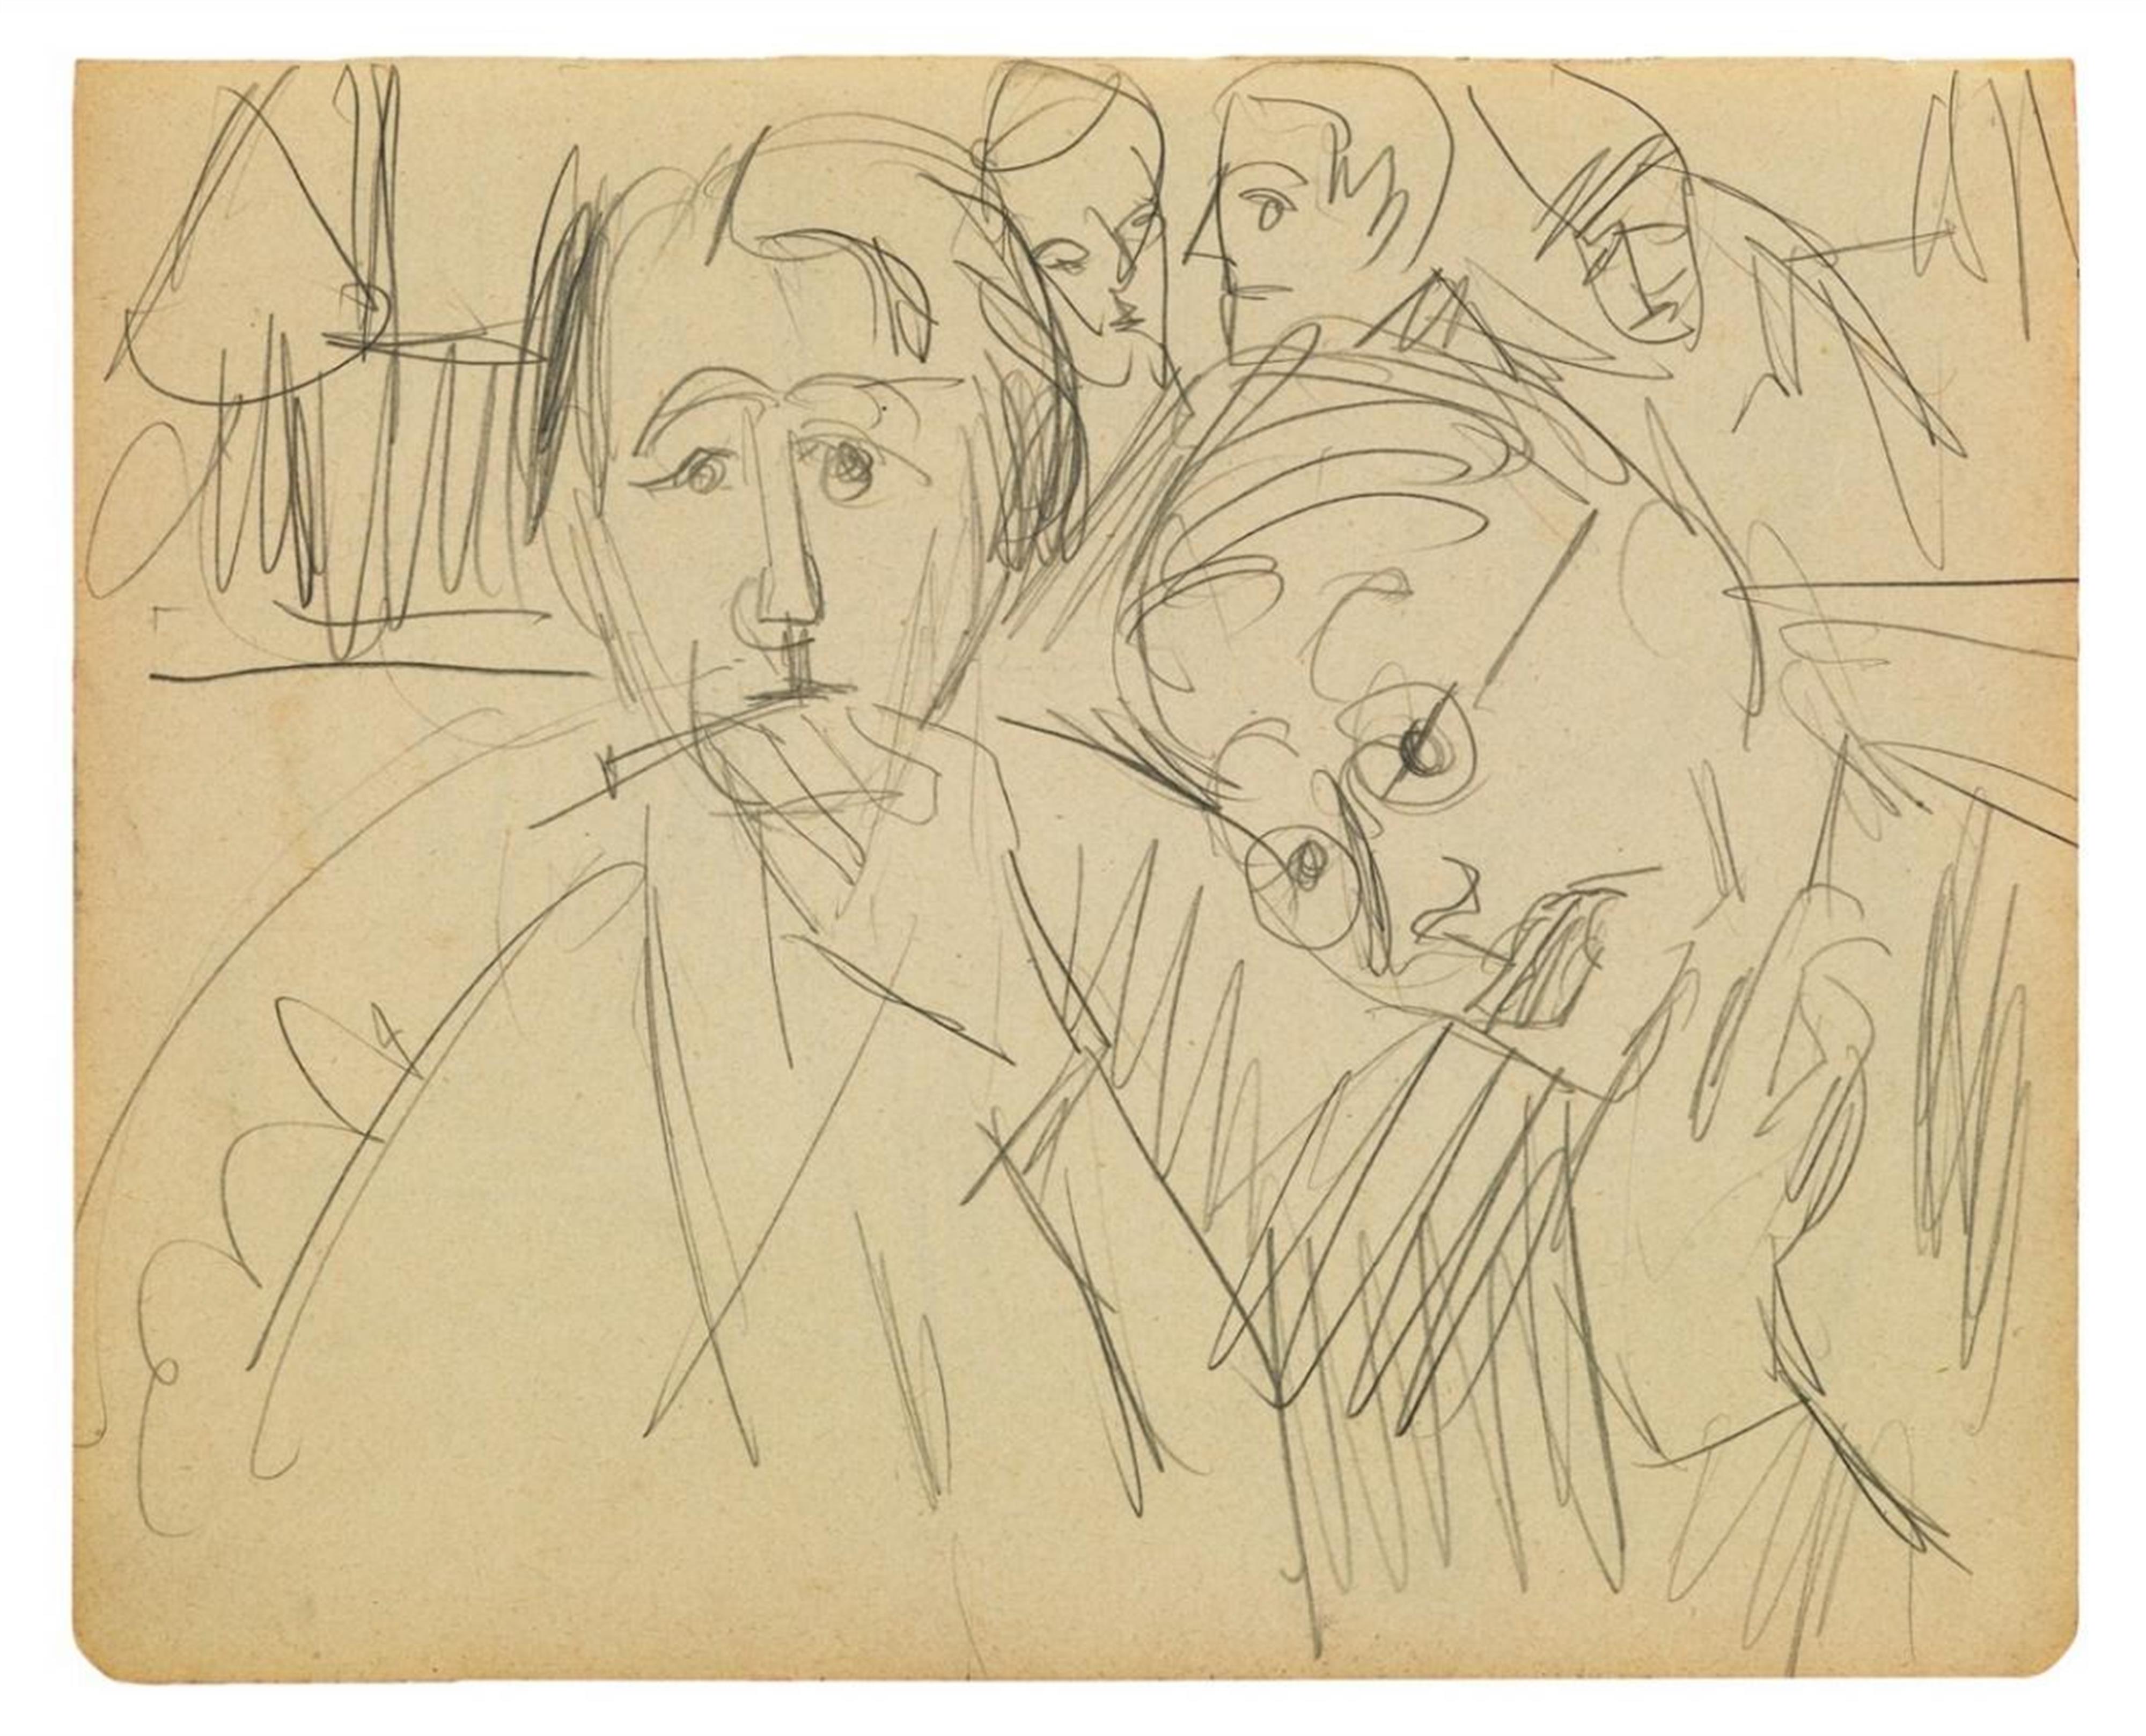 Ernst Ludwig Kirchner - Skizzenbuch - image-4